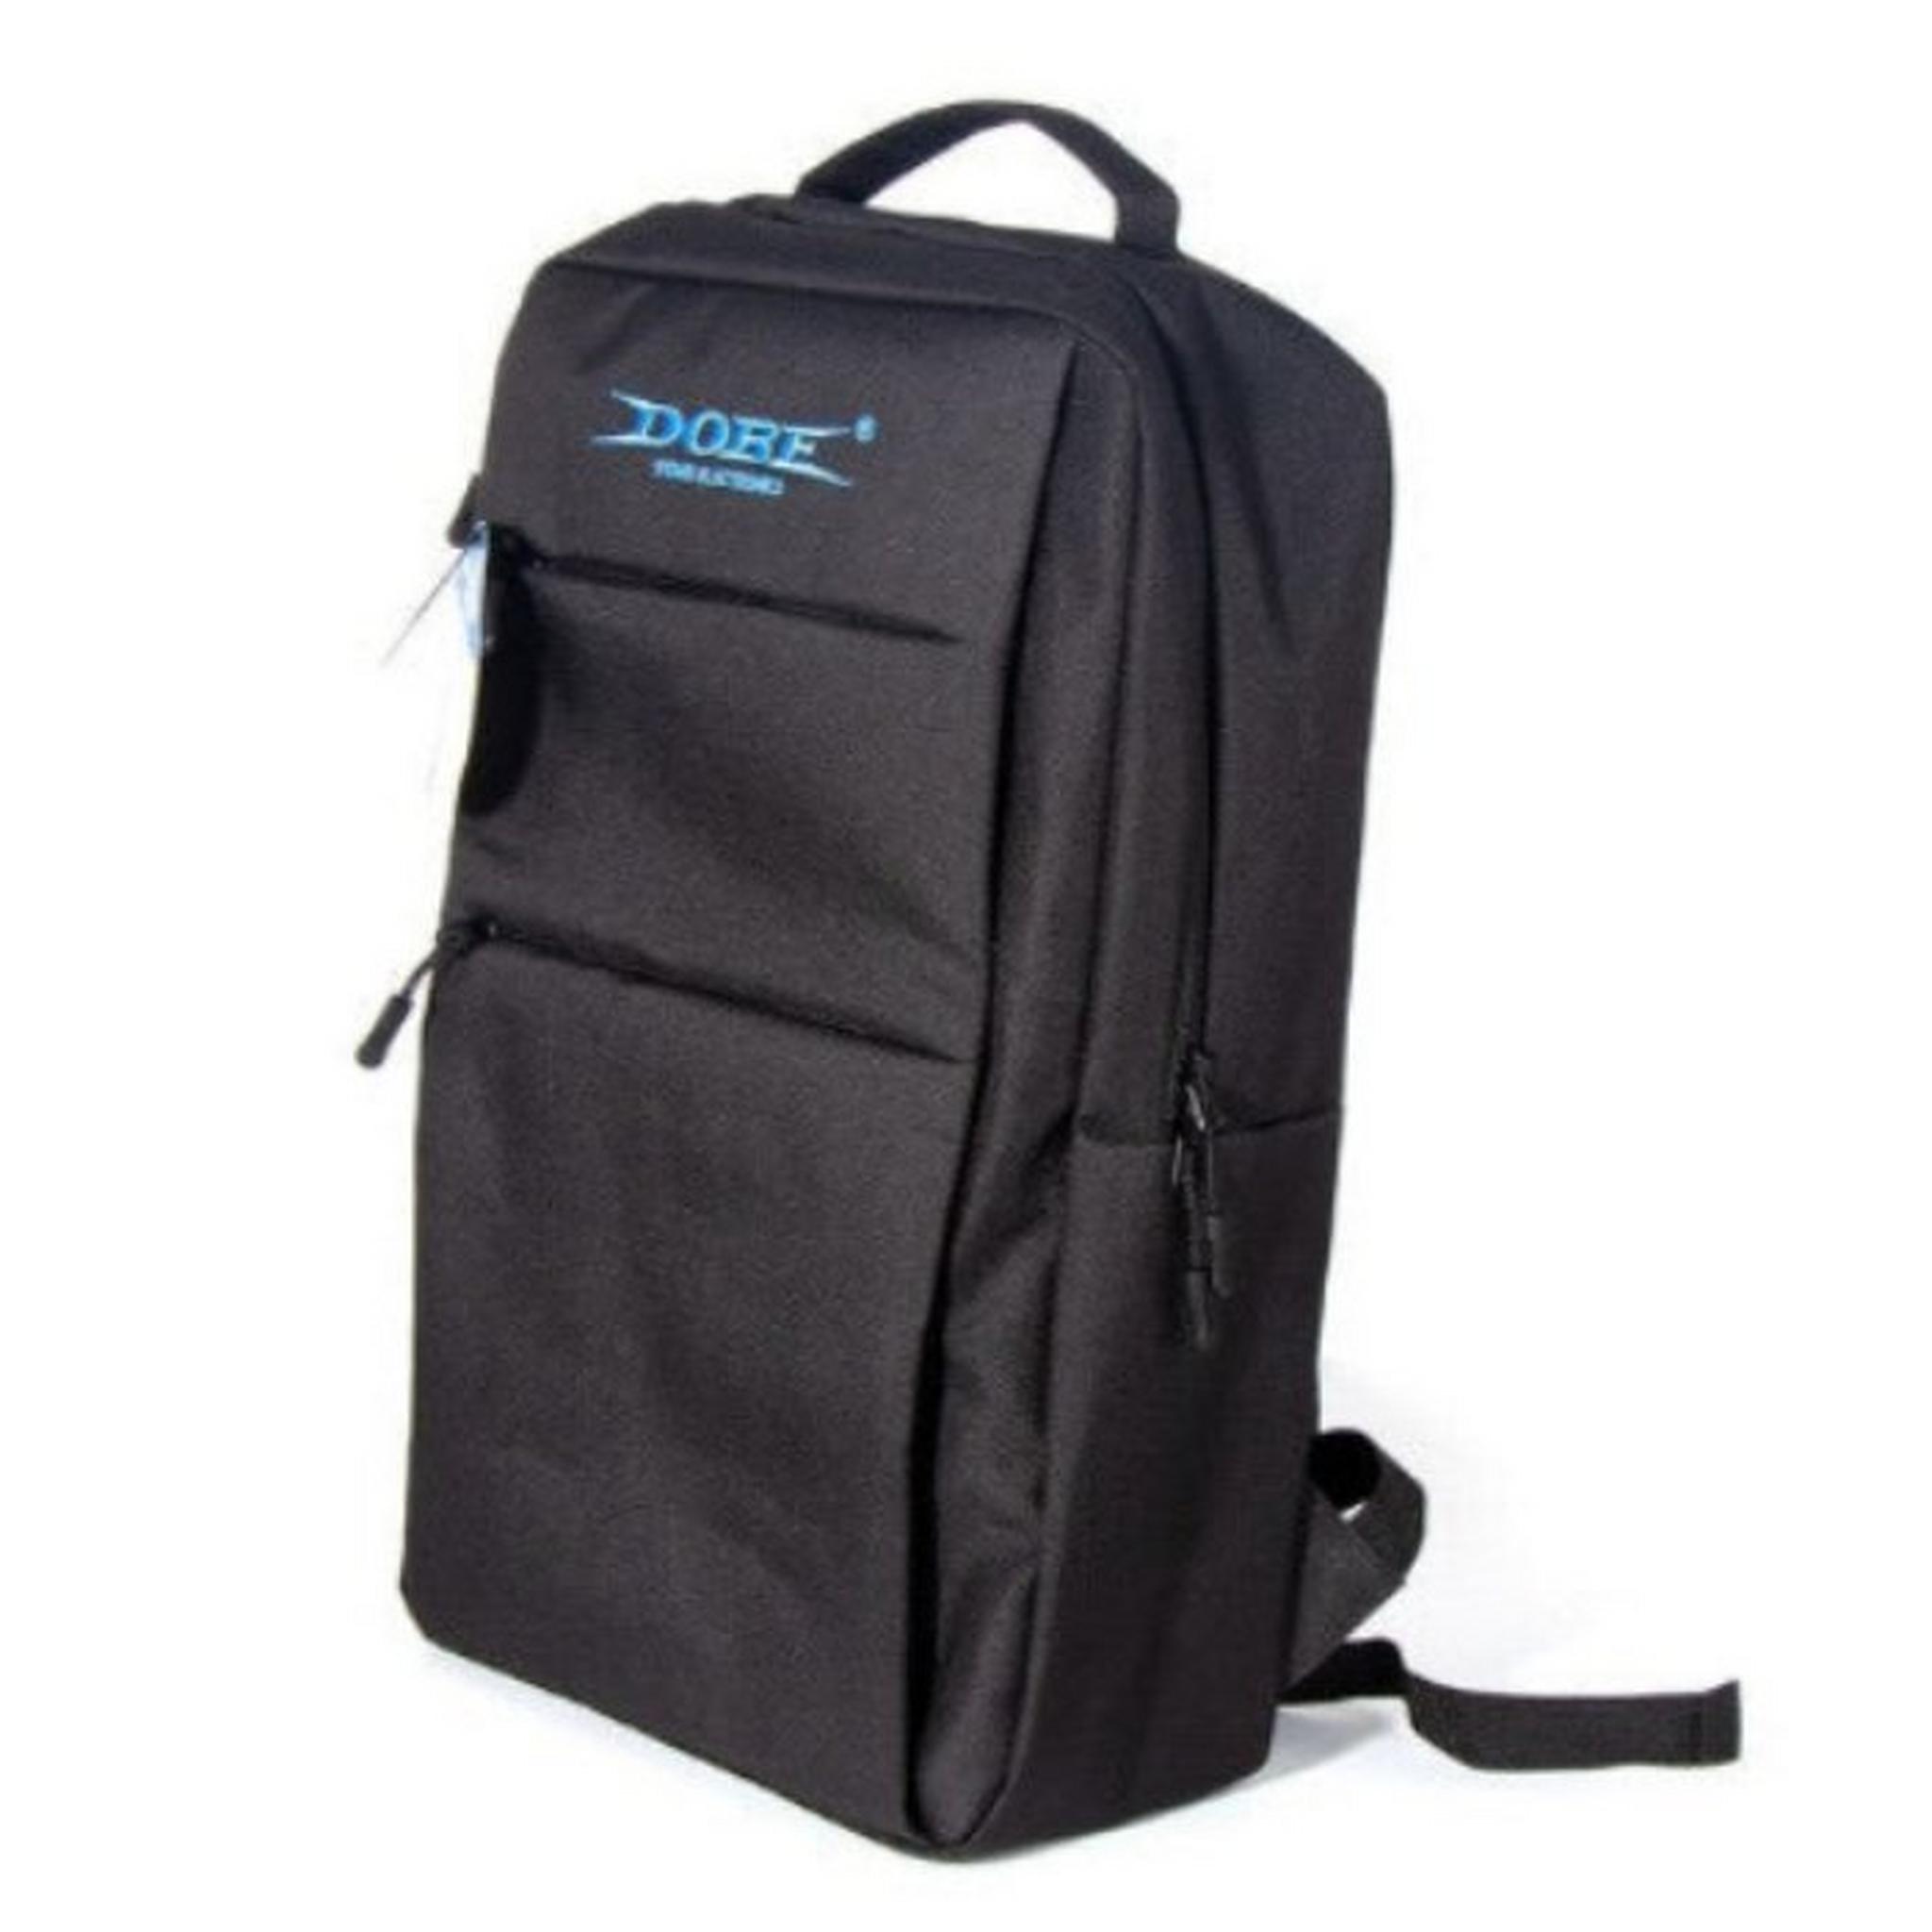 Dobe Backpack Travel Case - Black